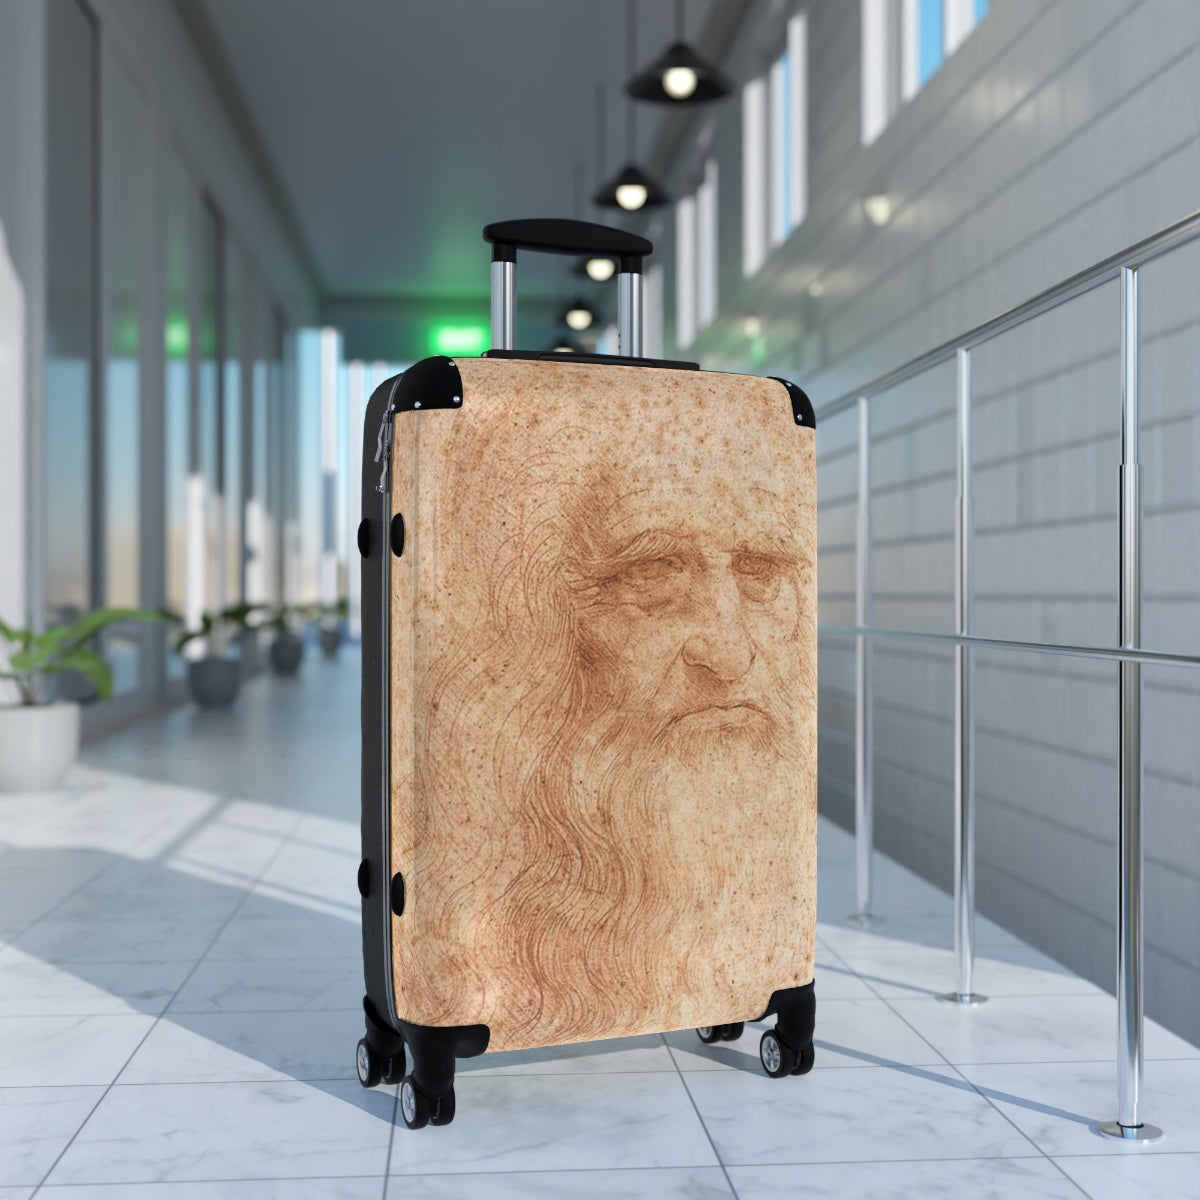 Getrott Portrait of a Man in Red Chalk by Leonardo Da Vinci Black Cabin Suitcase Extended Storage Adjustable Telescopic Handle Double wheeled Polycarbonate Hard-shell Built-in Lock-Bags-Geotrott